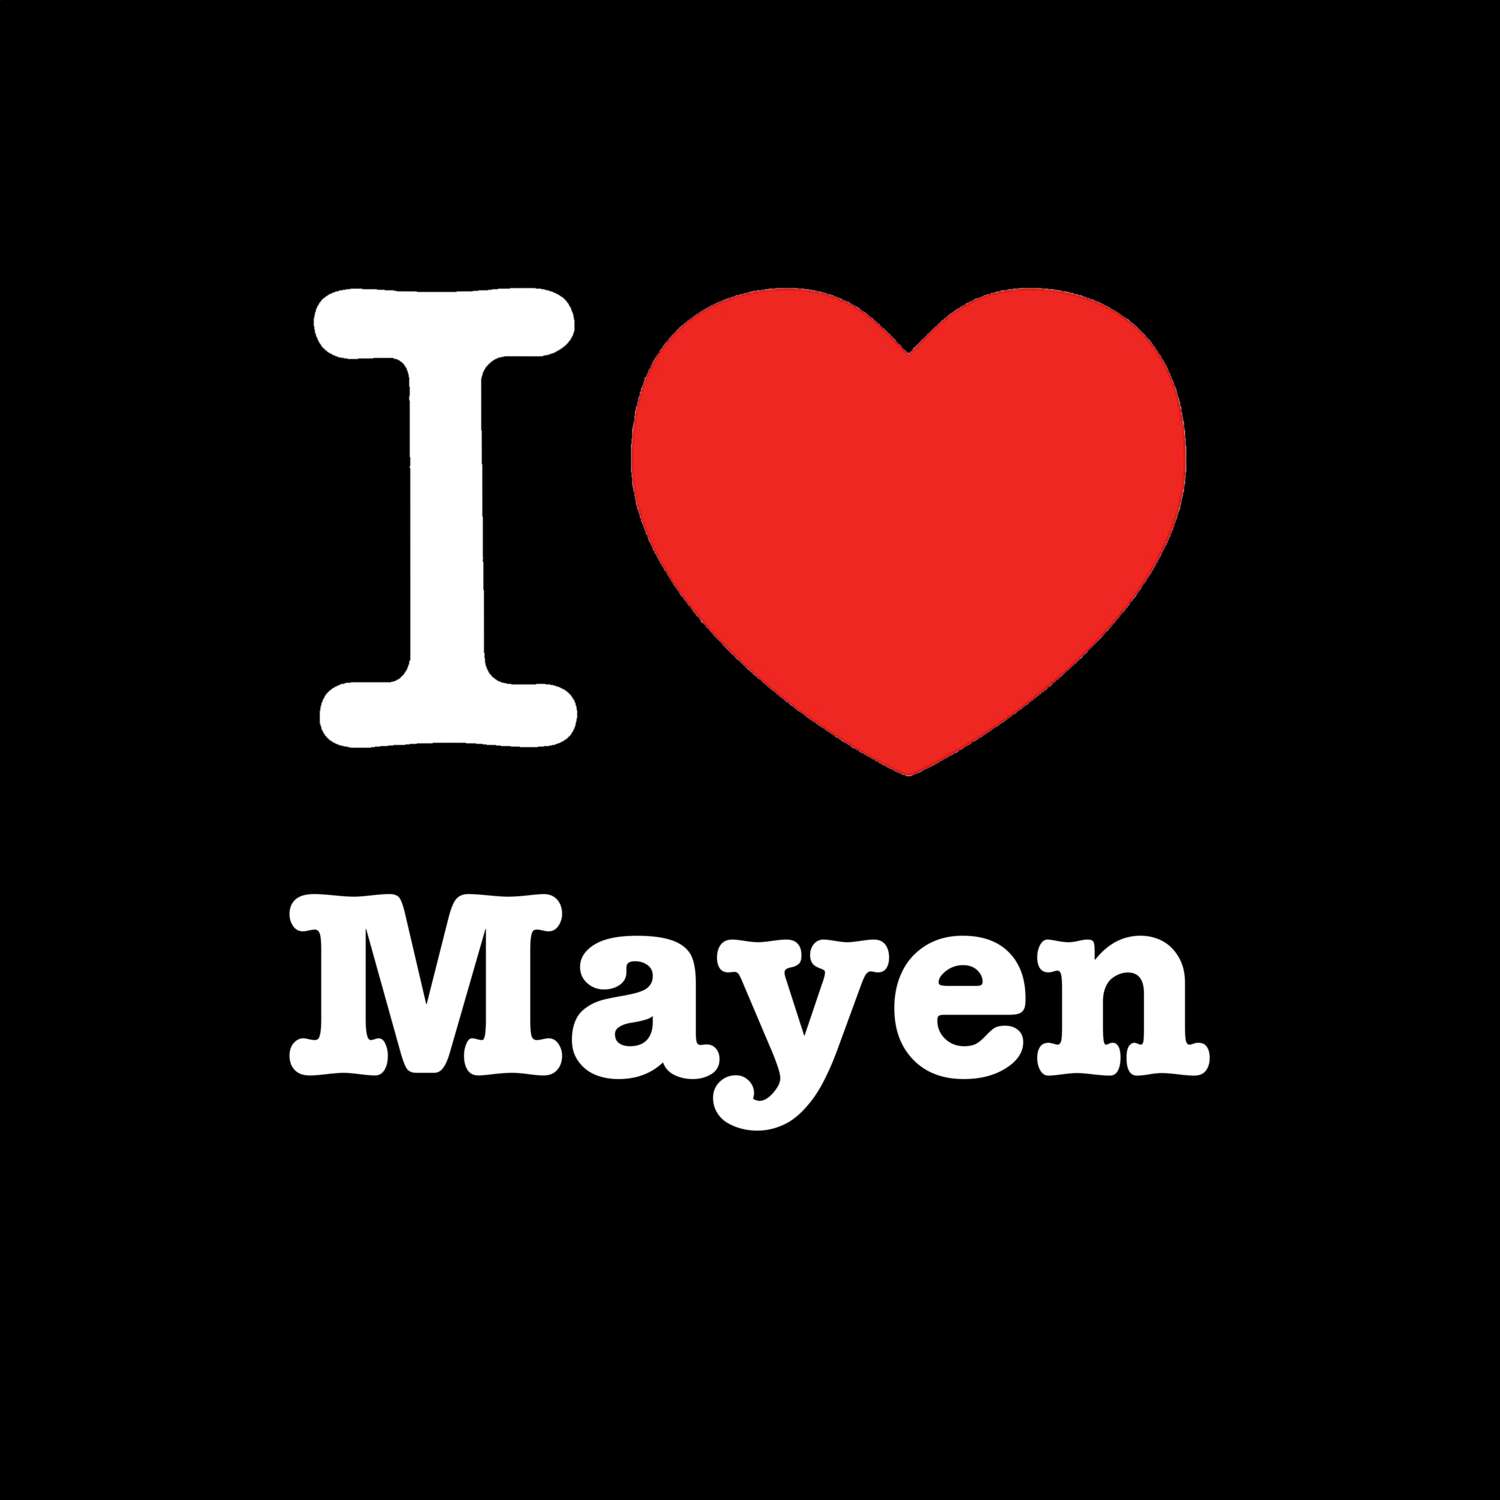 Mayen T-Shirt »I love«